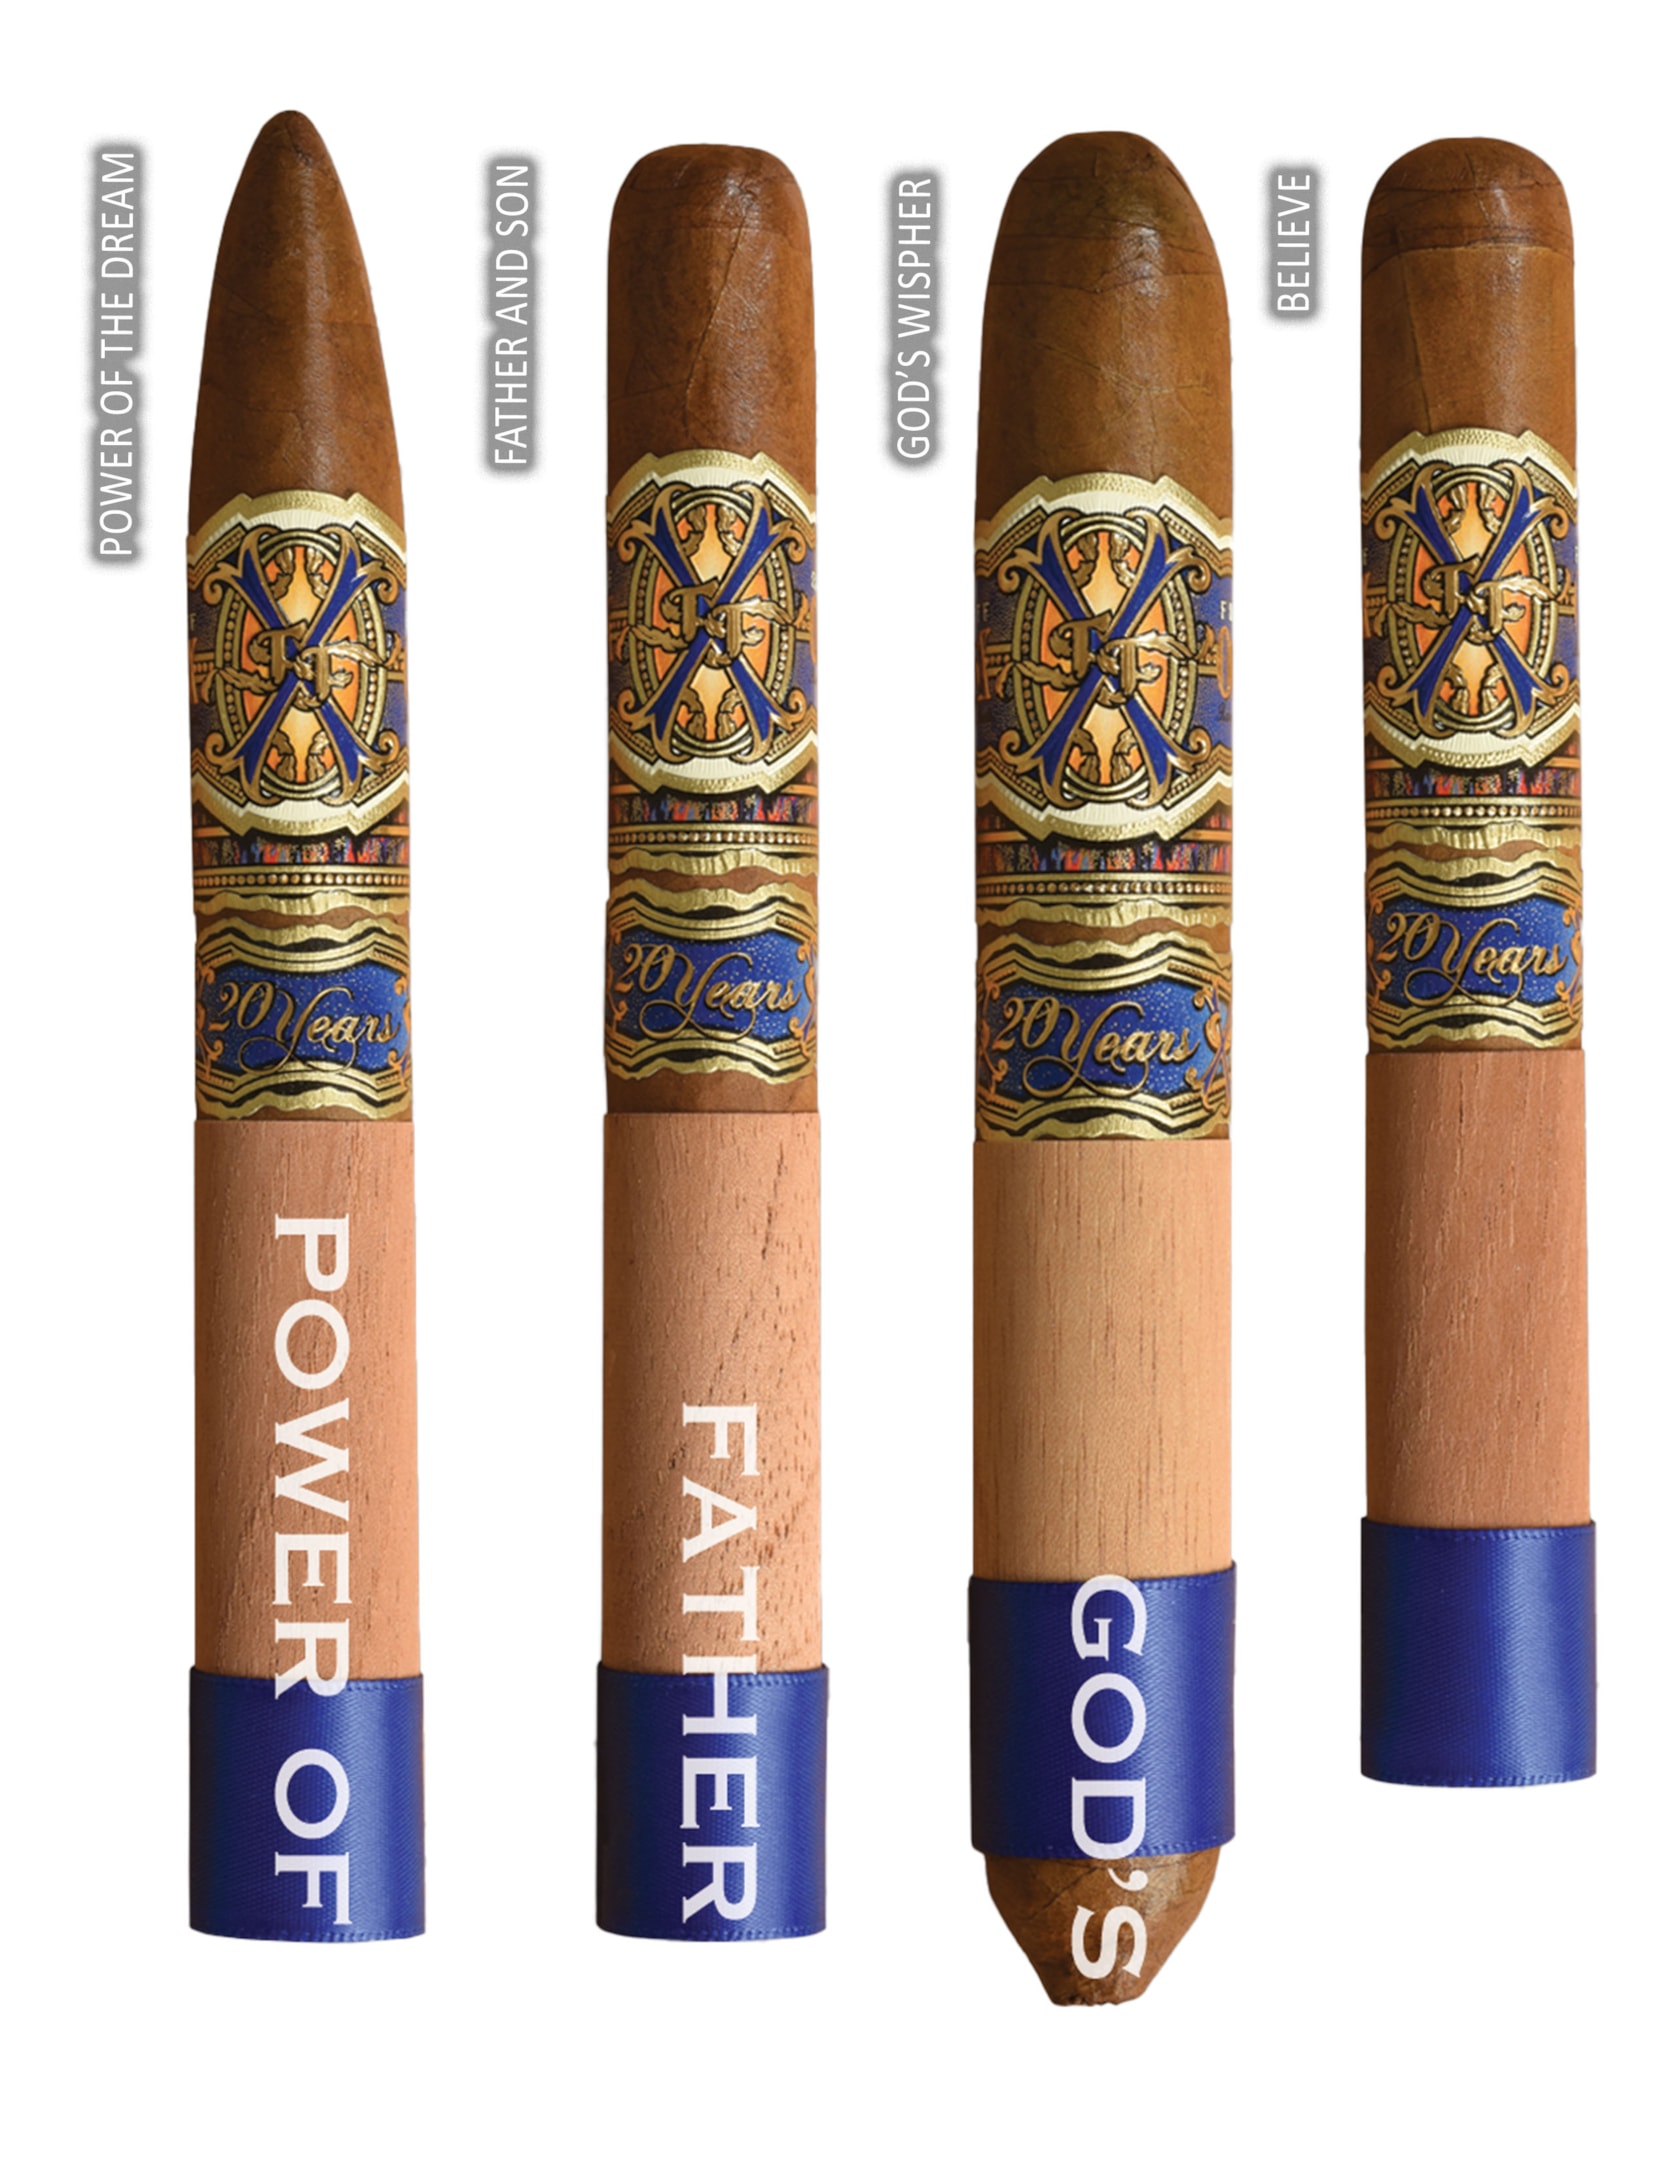 Opus X 20th Anniversary Cigar Line Up